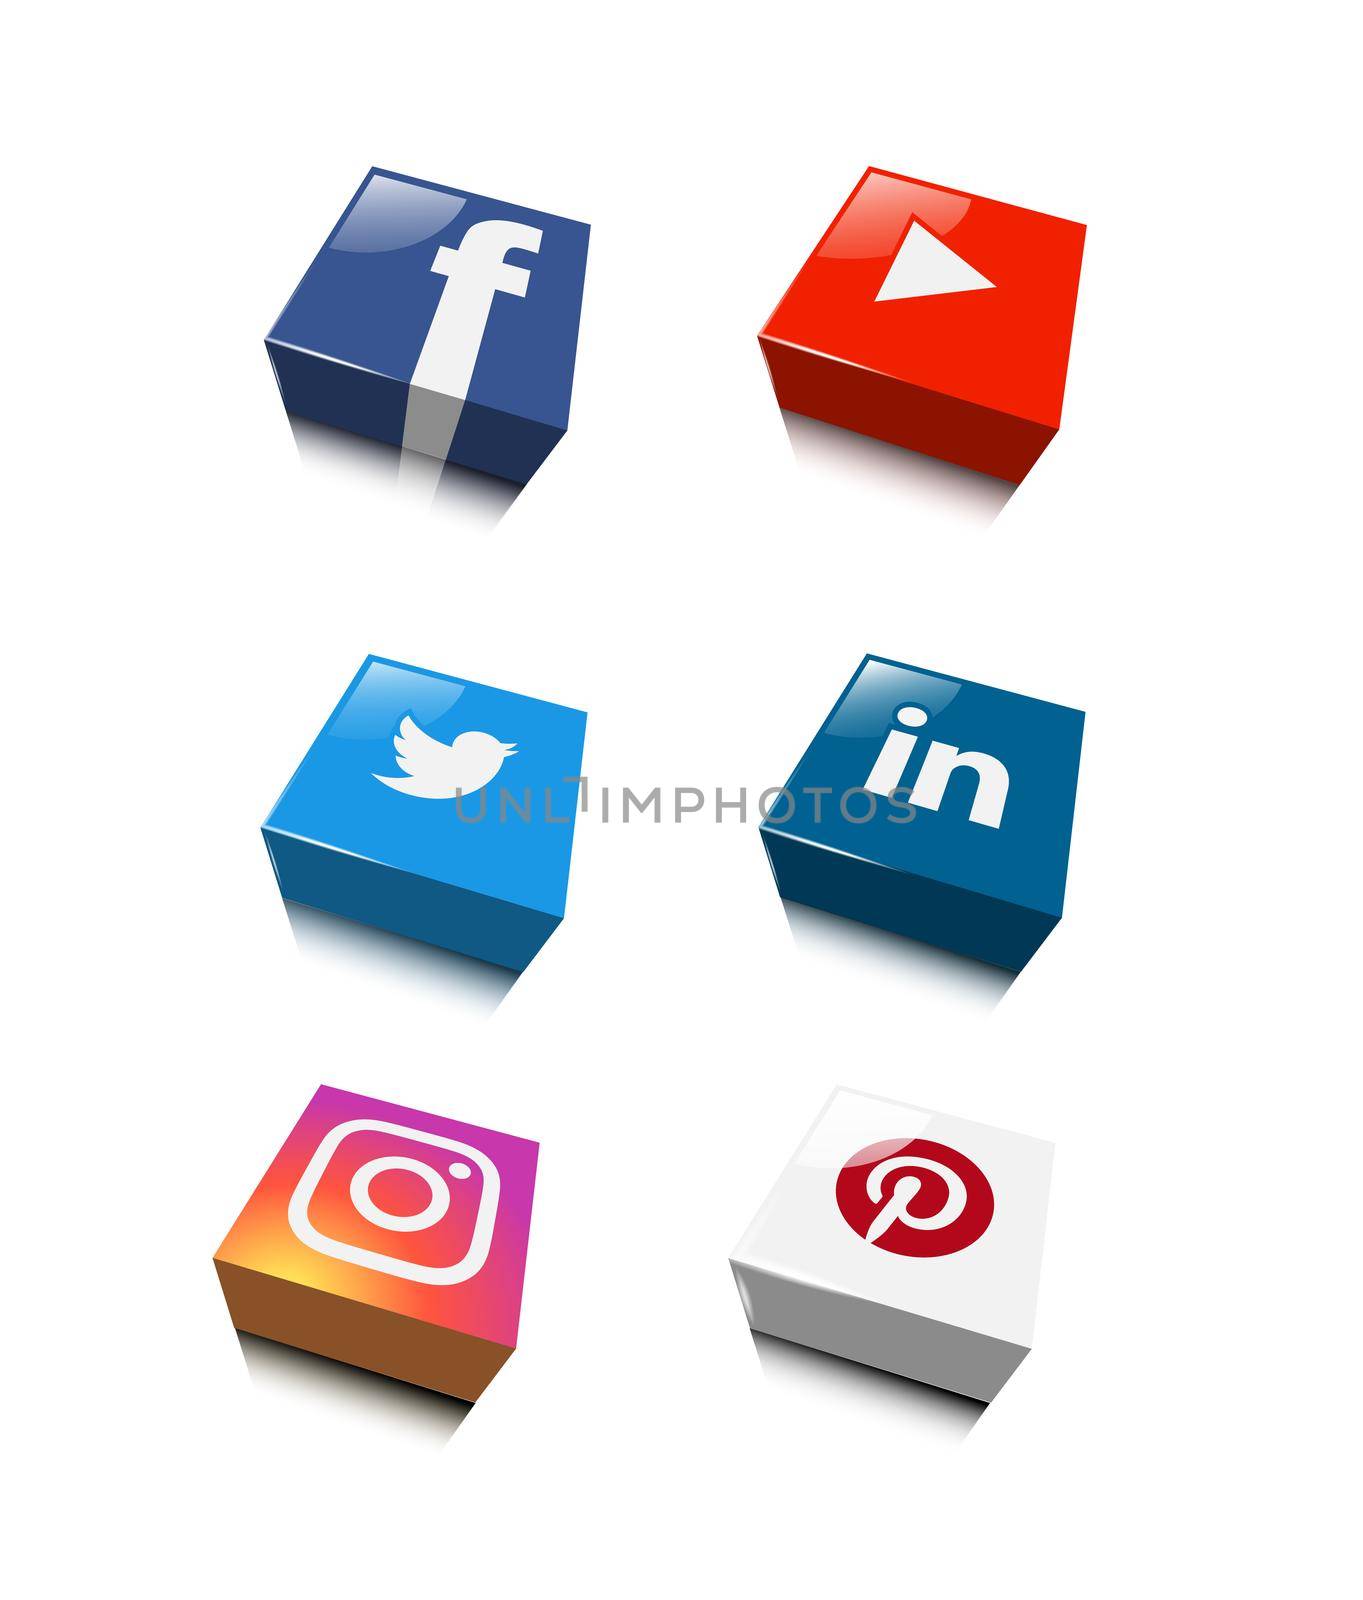 3d social network logos in vector illustration, facebook, youtube, twitter, linked'in, instagram and pinterest